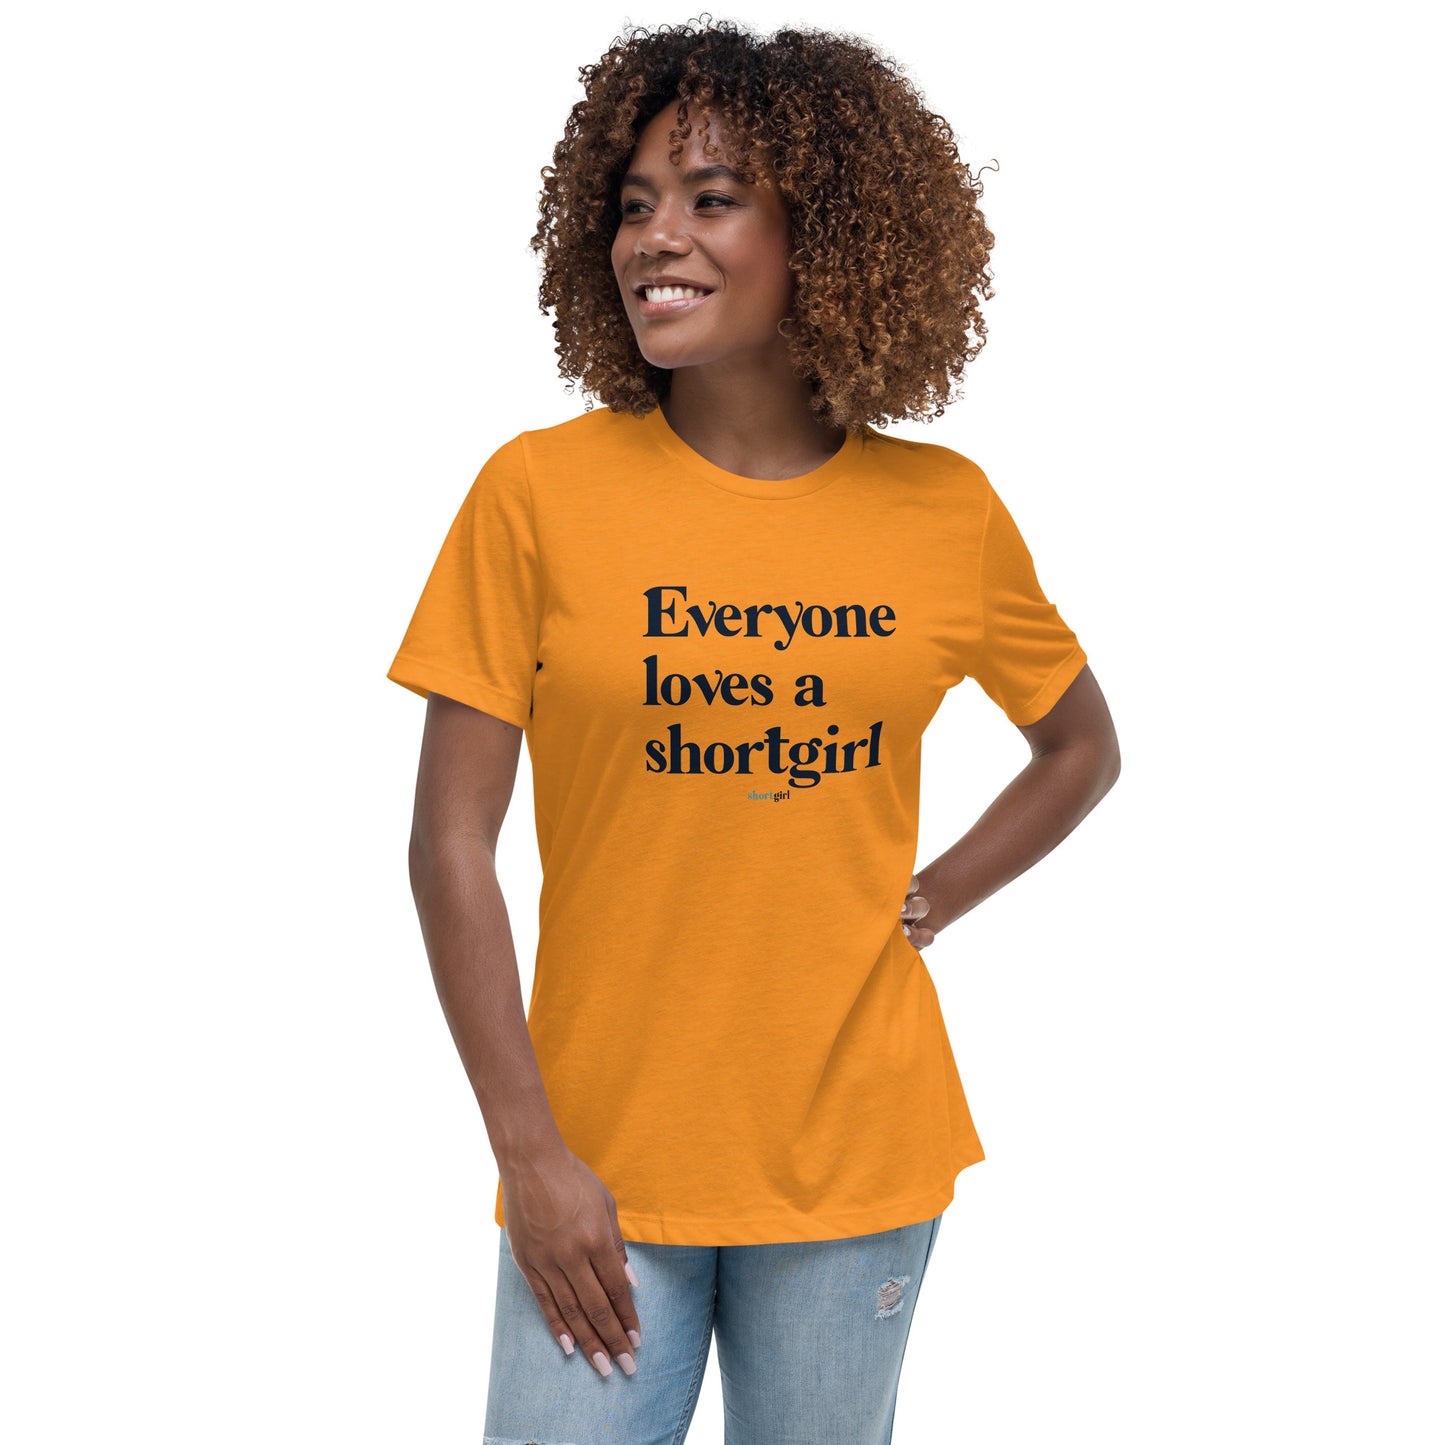 Women's Relaxed T-Shirt - Everyone Loves a shortgirl